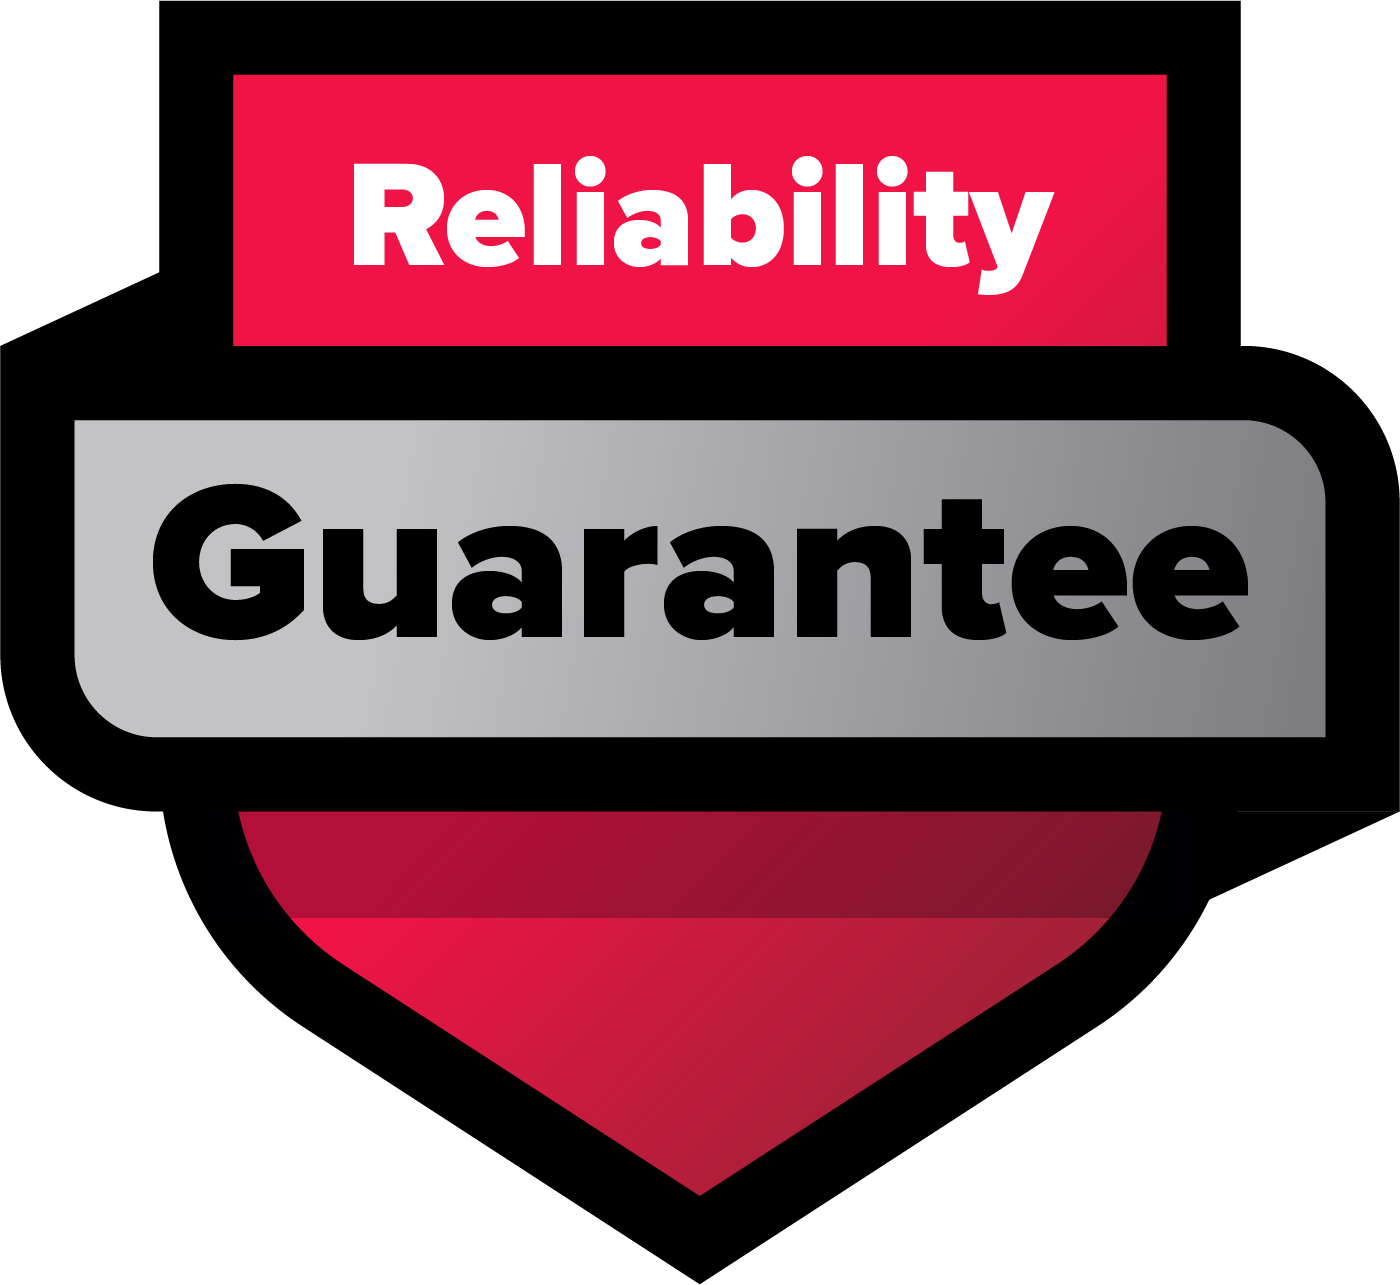 The DISH Reliability Guarantee icon